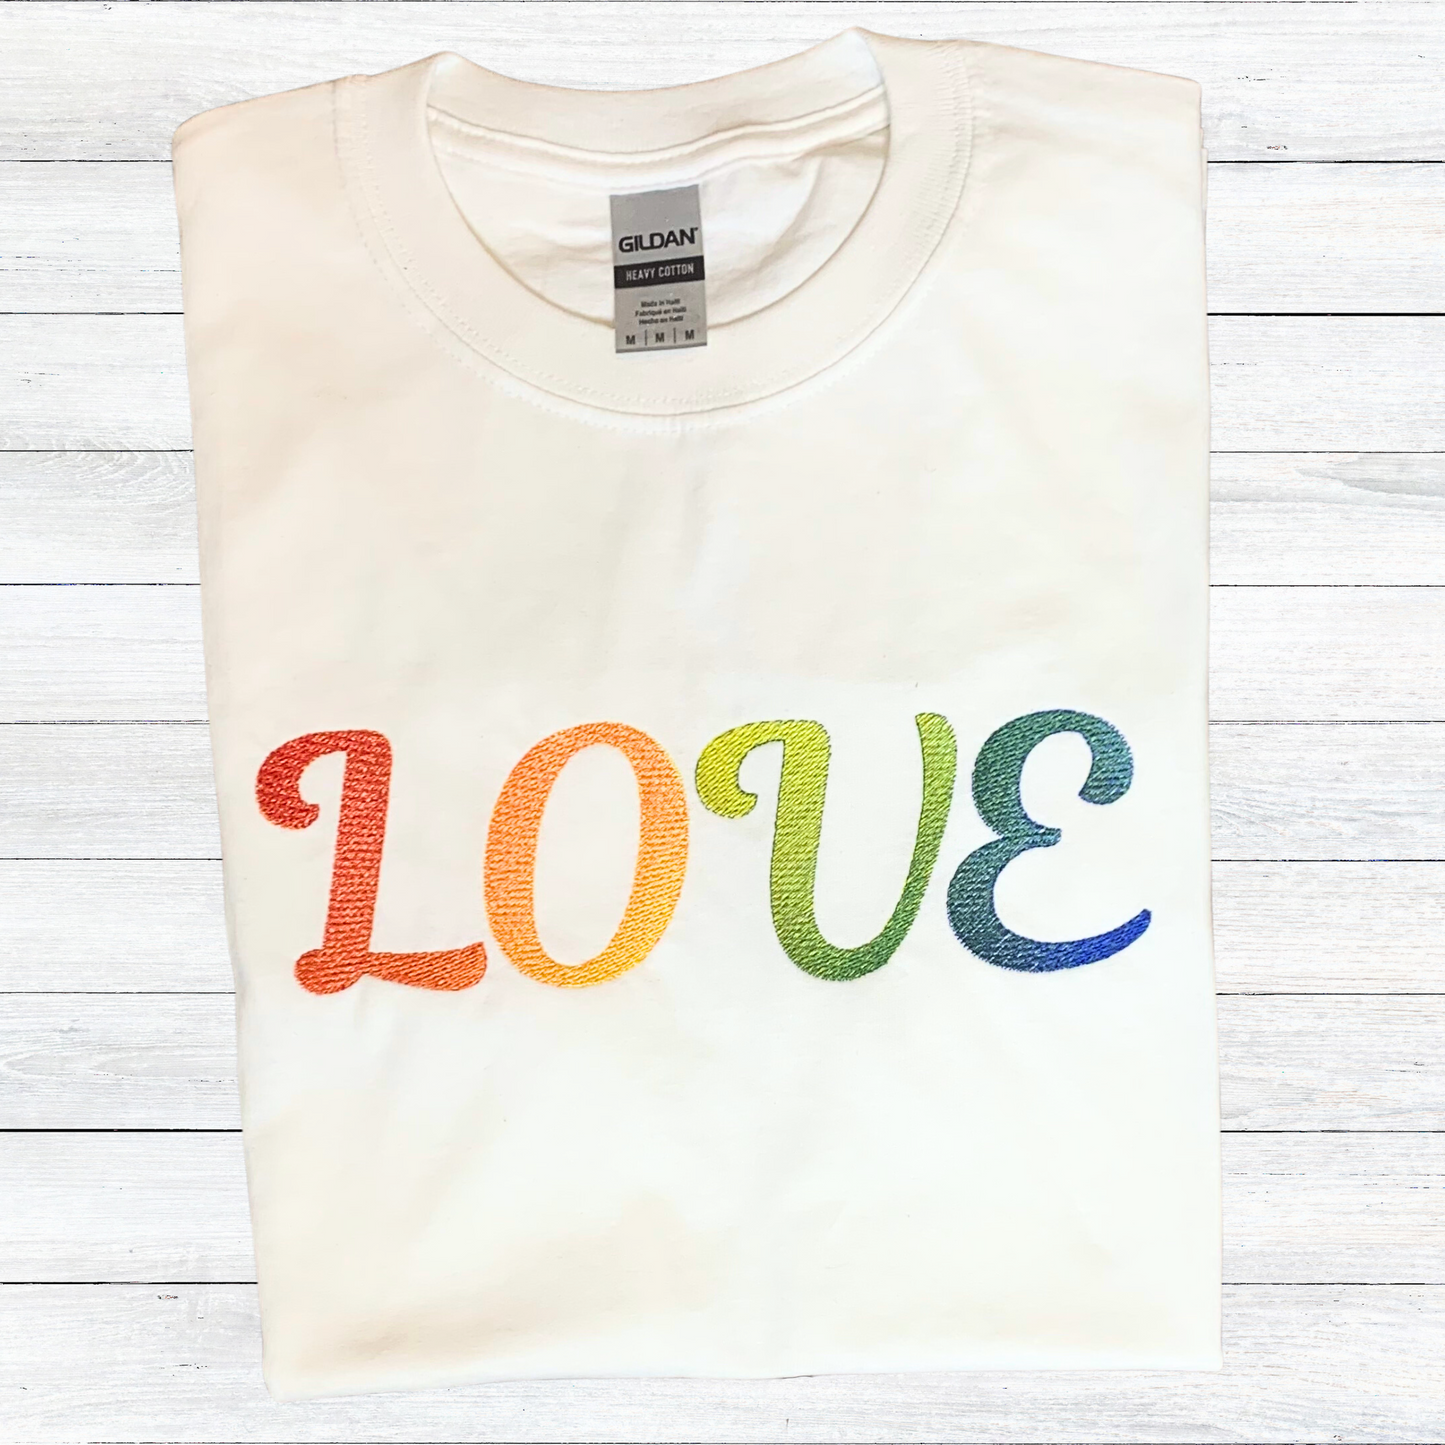 Rainbow Love Embroidered Shirt